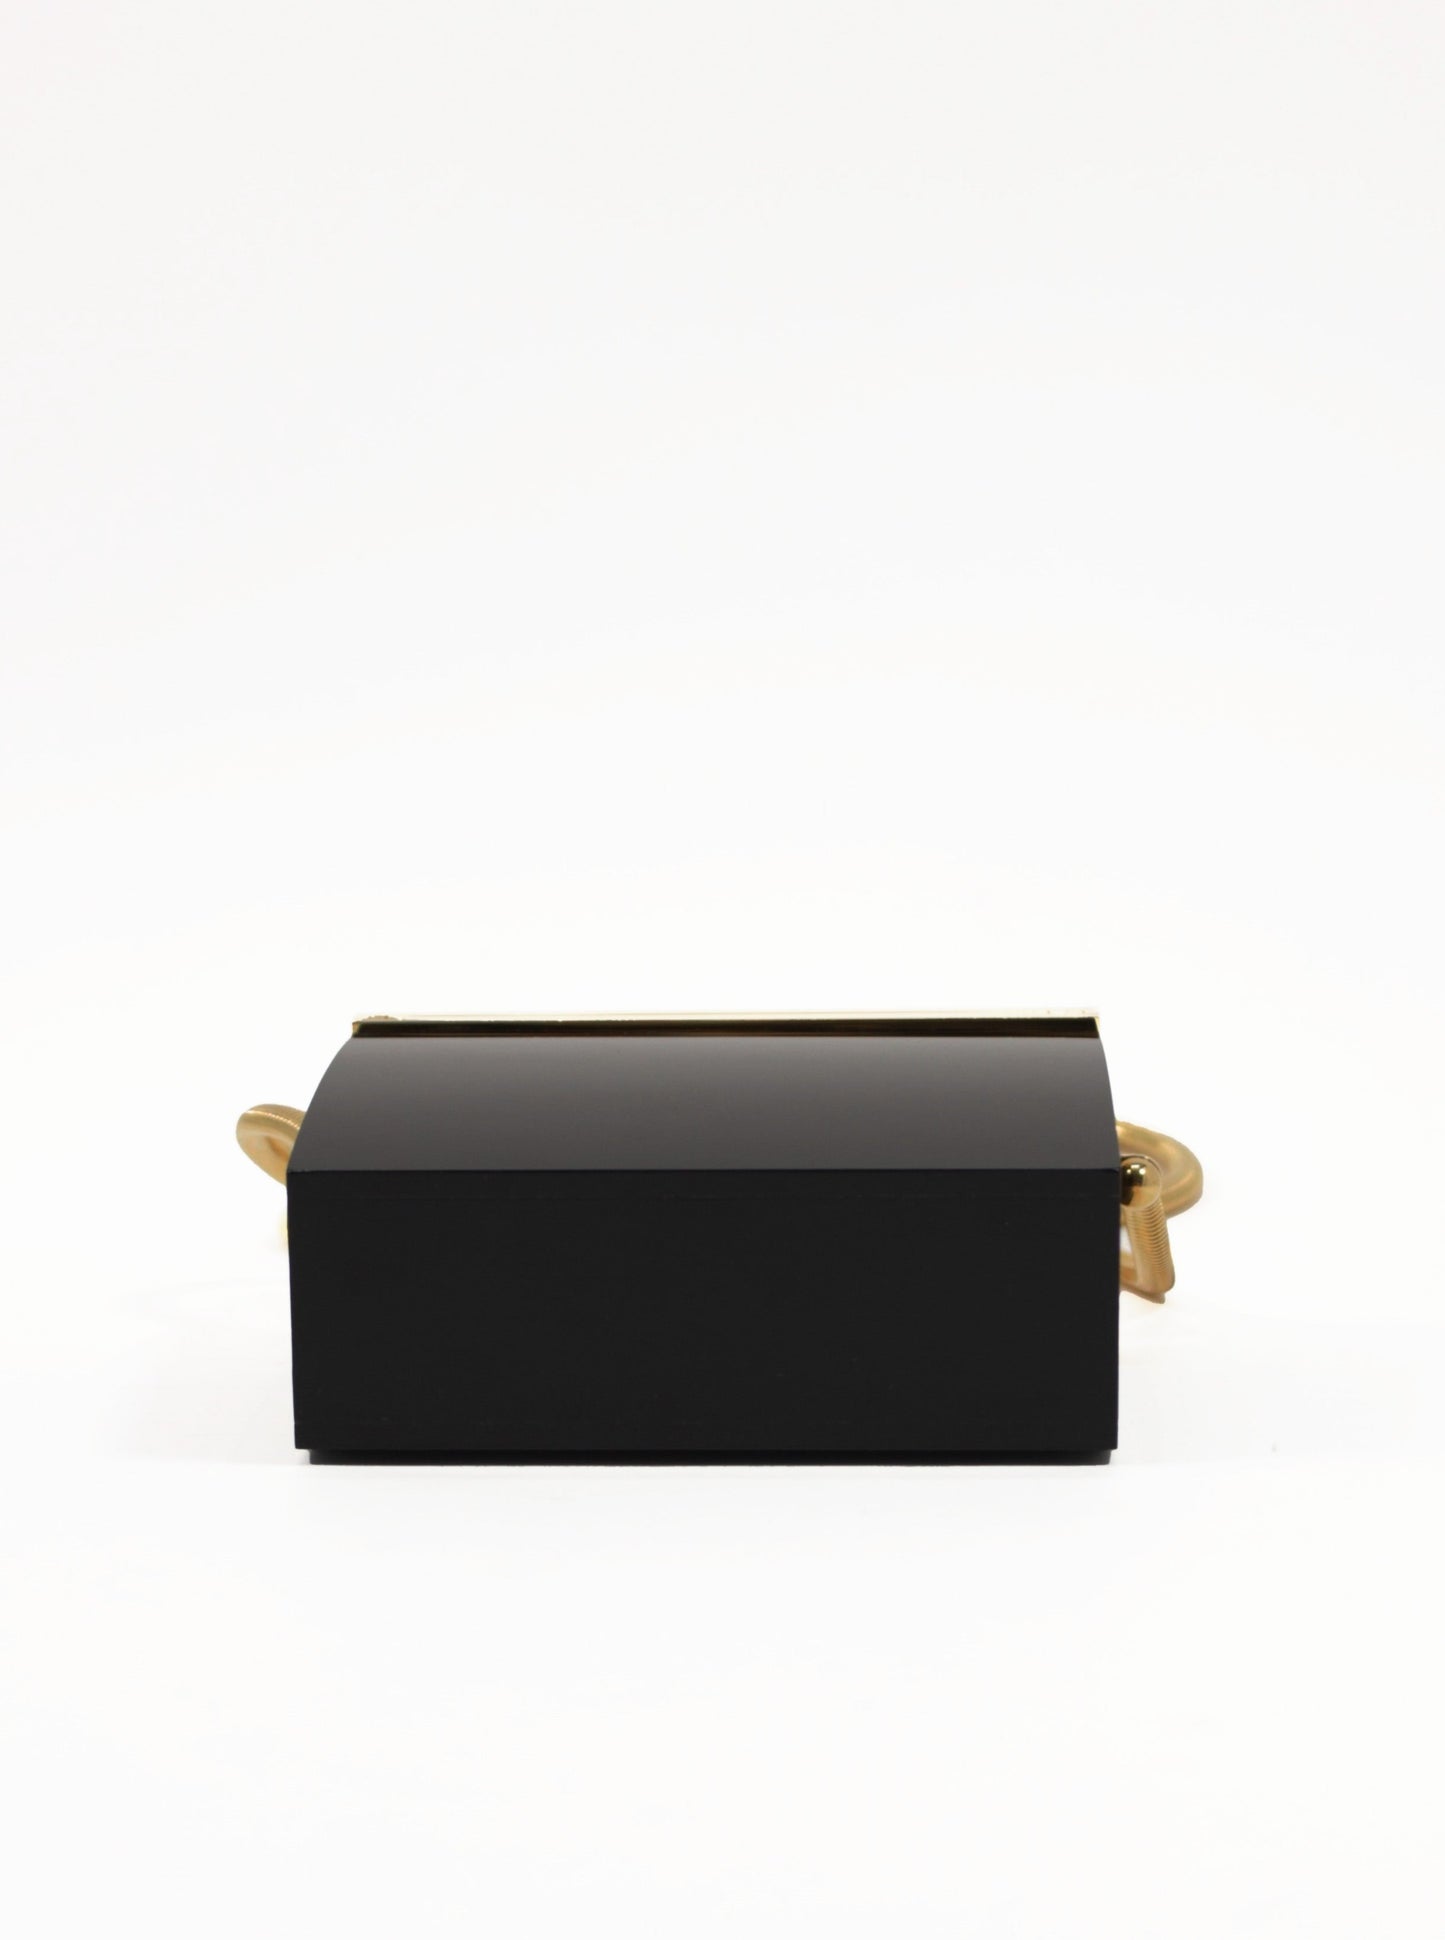 Chanel PVC Box Shoulder Bag Plastic Black Gold